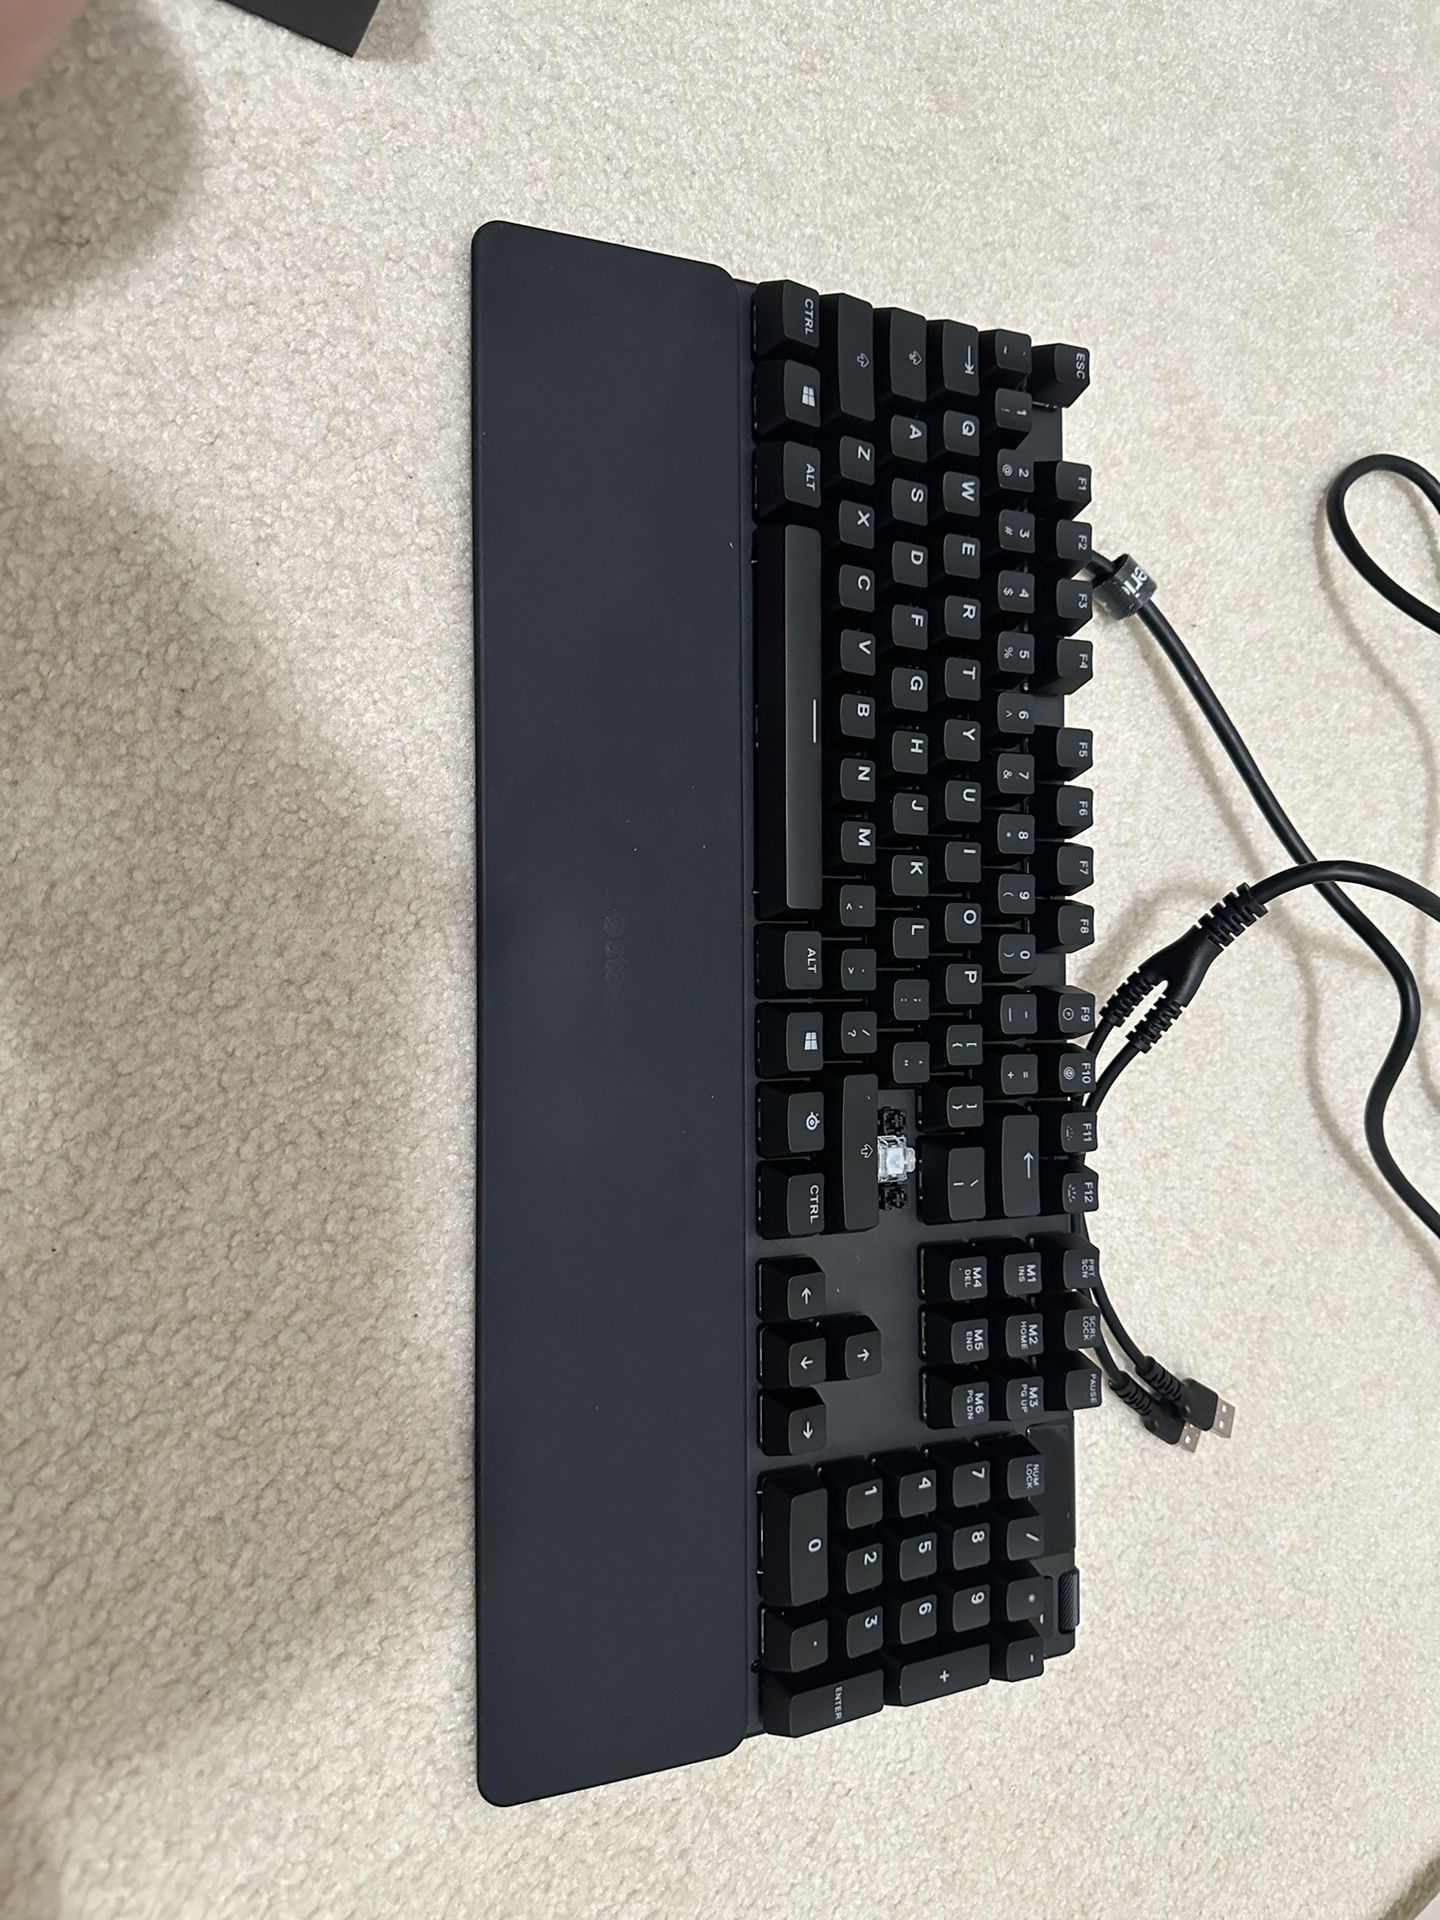 SteelSeries Apex Pro Full Keyboard